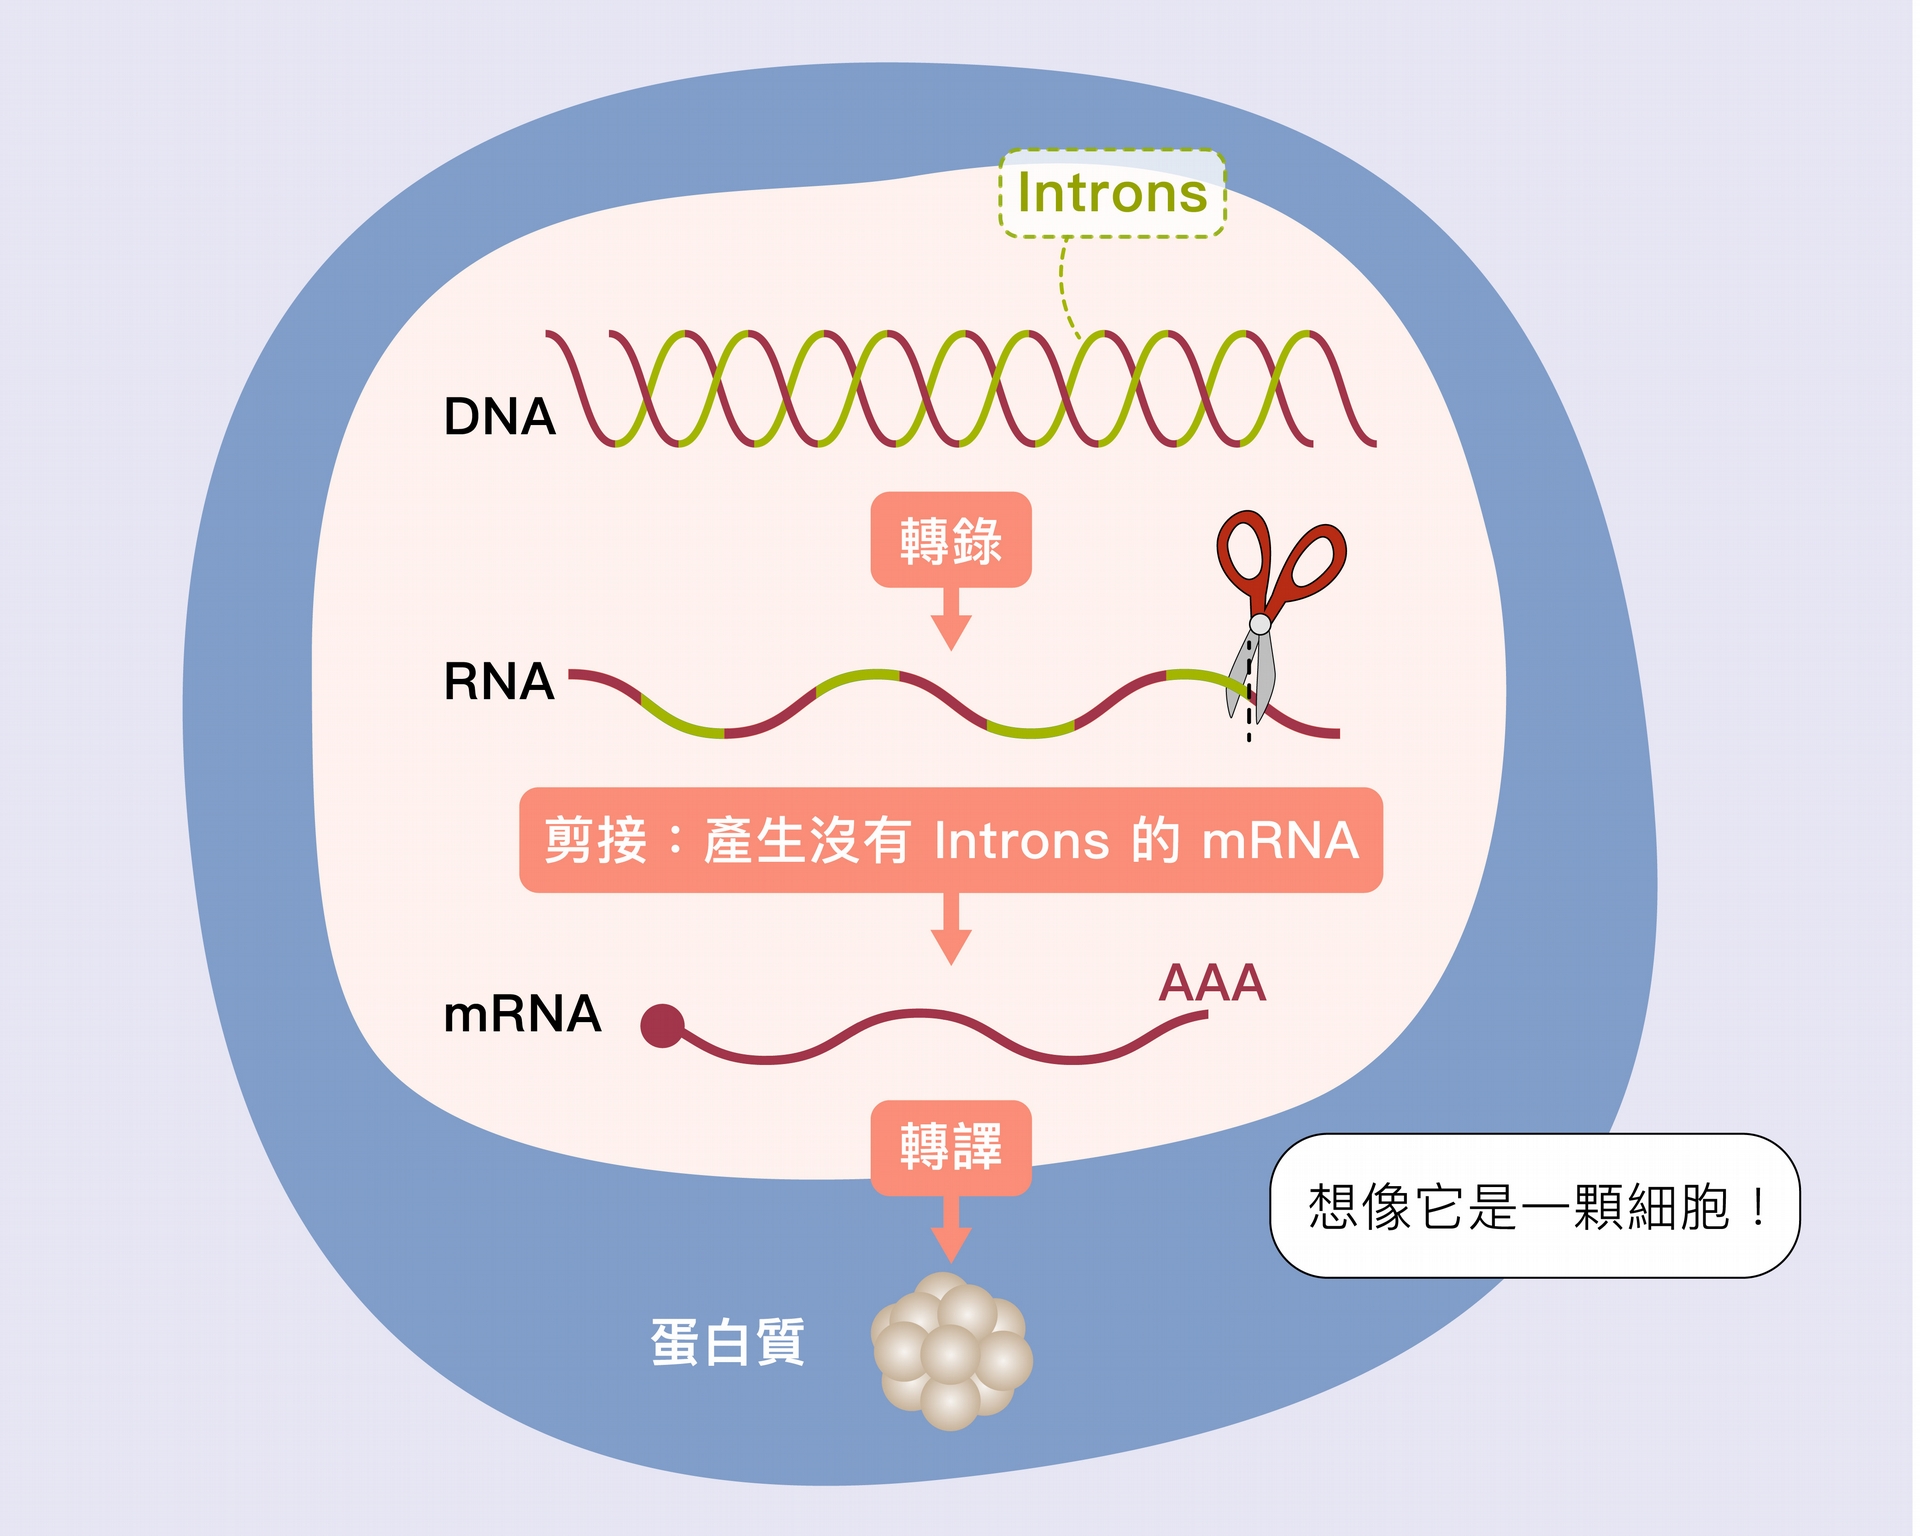 DNA 基因不是呈連續性的，中間穿插一些不需要的片段稱為內含子 (introns)，轉錄後的 RNA 必須剪去中間不需要的部分，把有用片段接起來，變成信使 RNA (mRNA)，細胞才能根據它製作蛋白質。 <br>資料來源│張典顯 <br>圖說設計│黃曉君、林洵安 